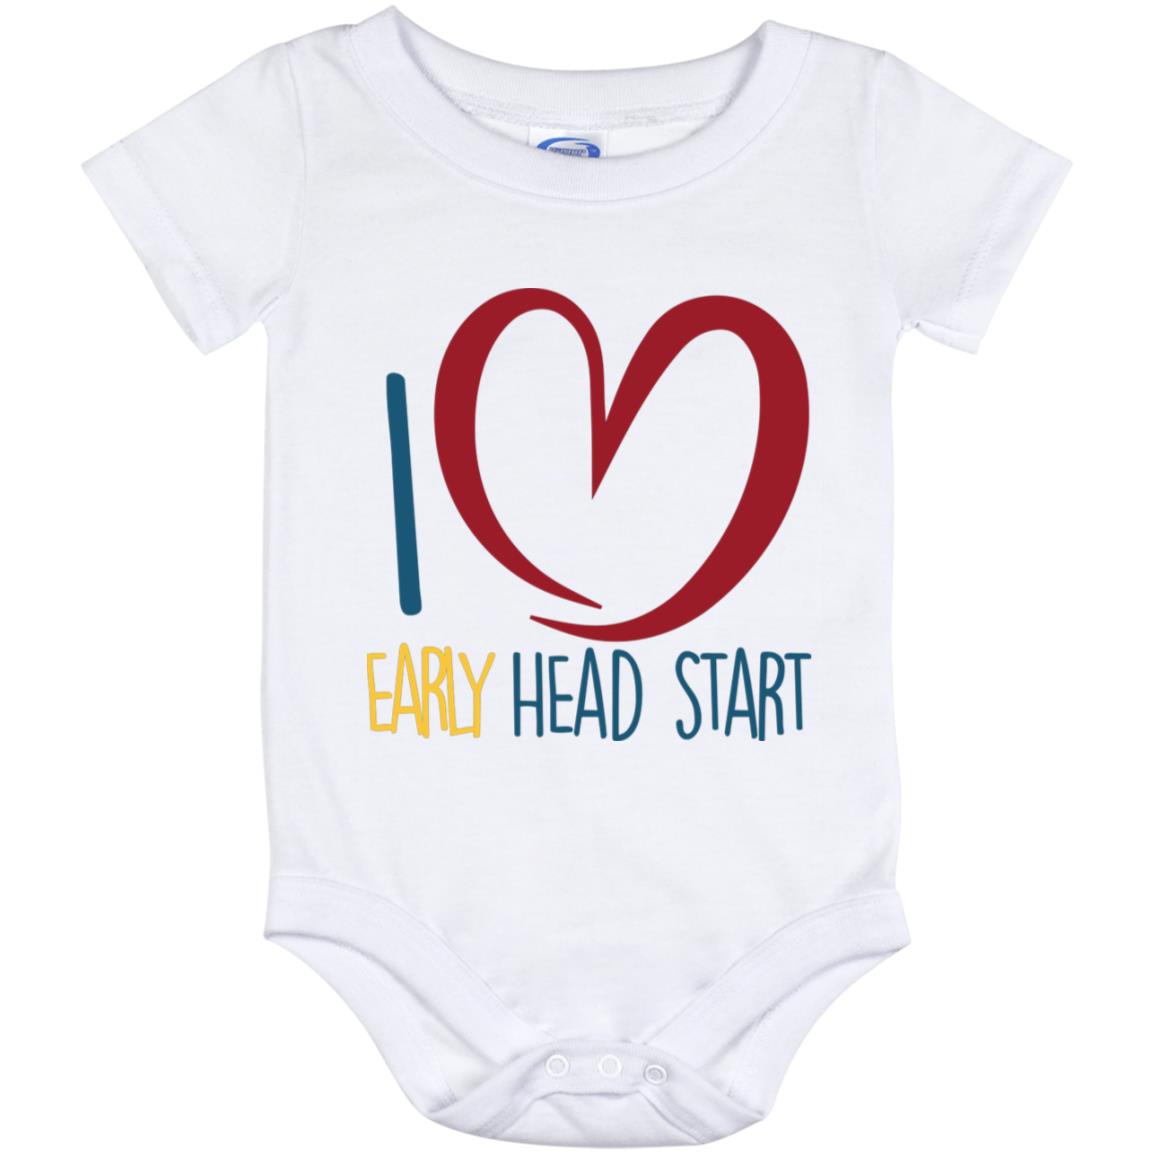 I Love Early Head Start 12 month onesie